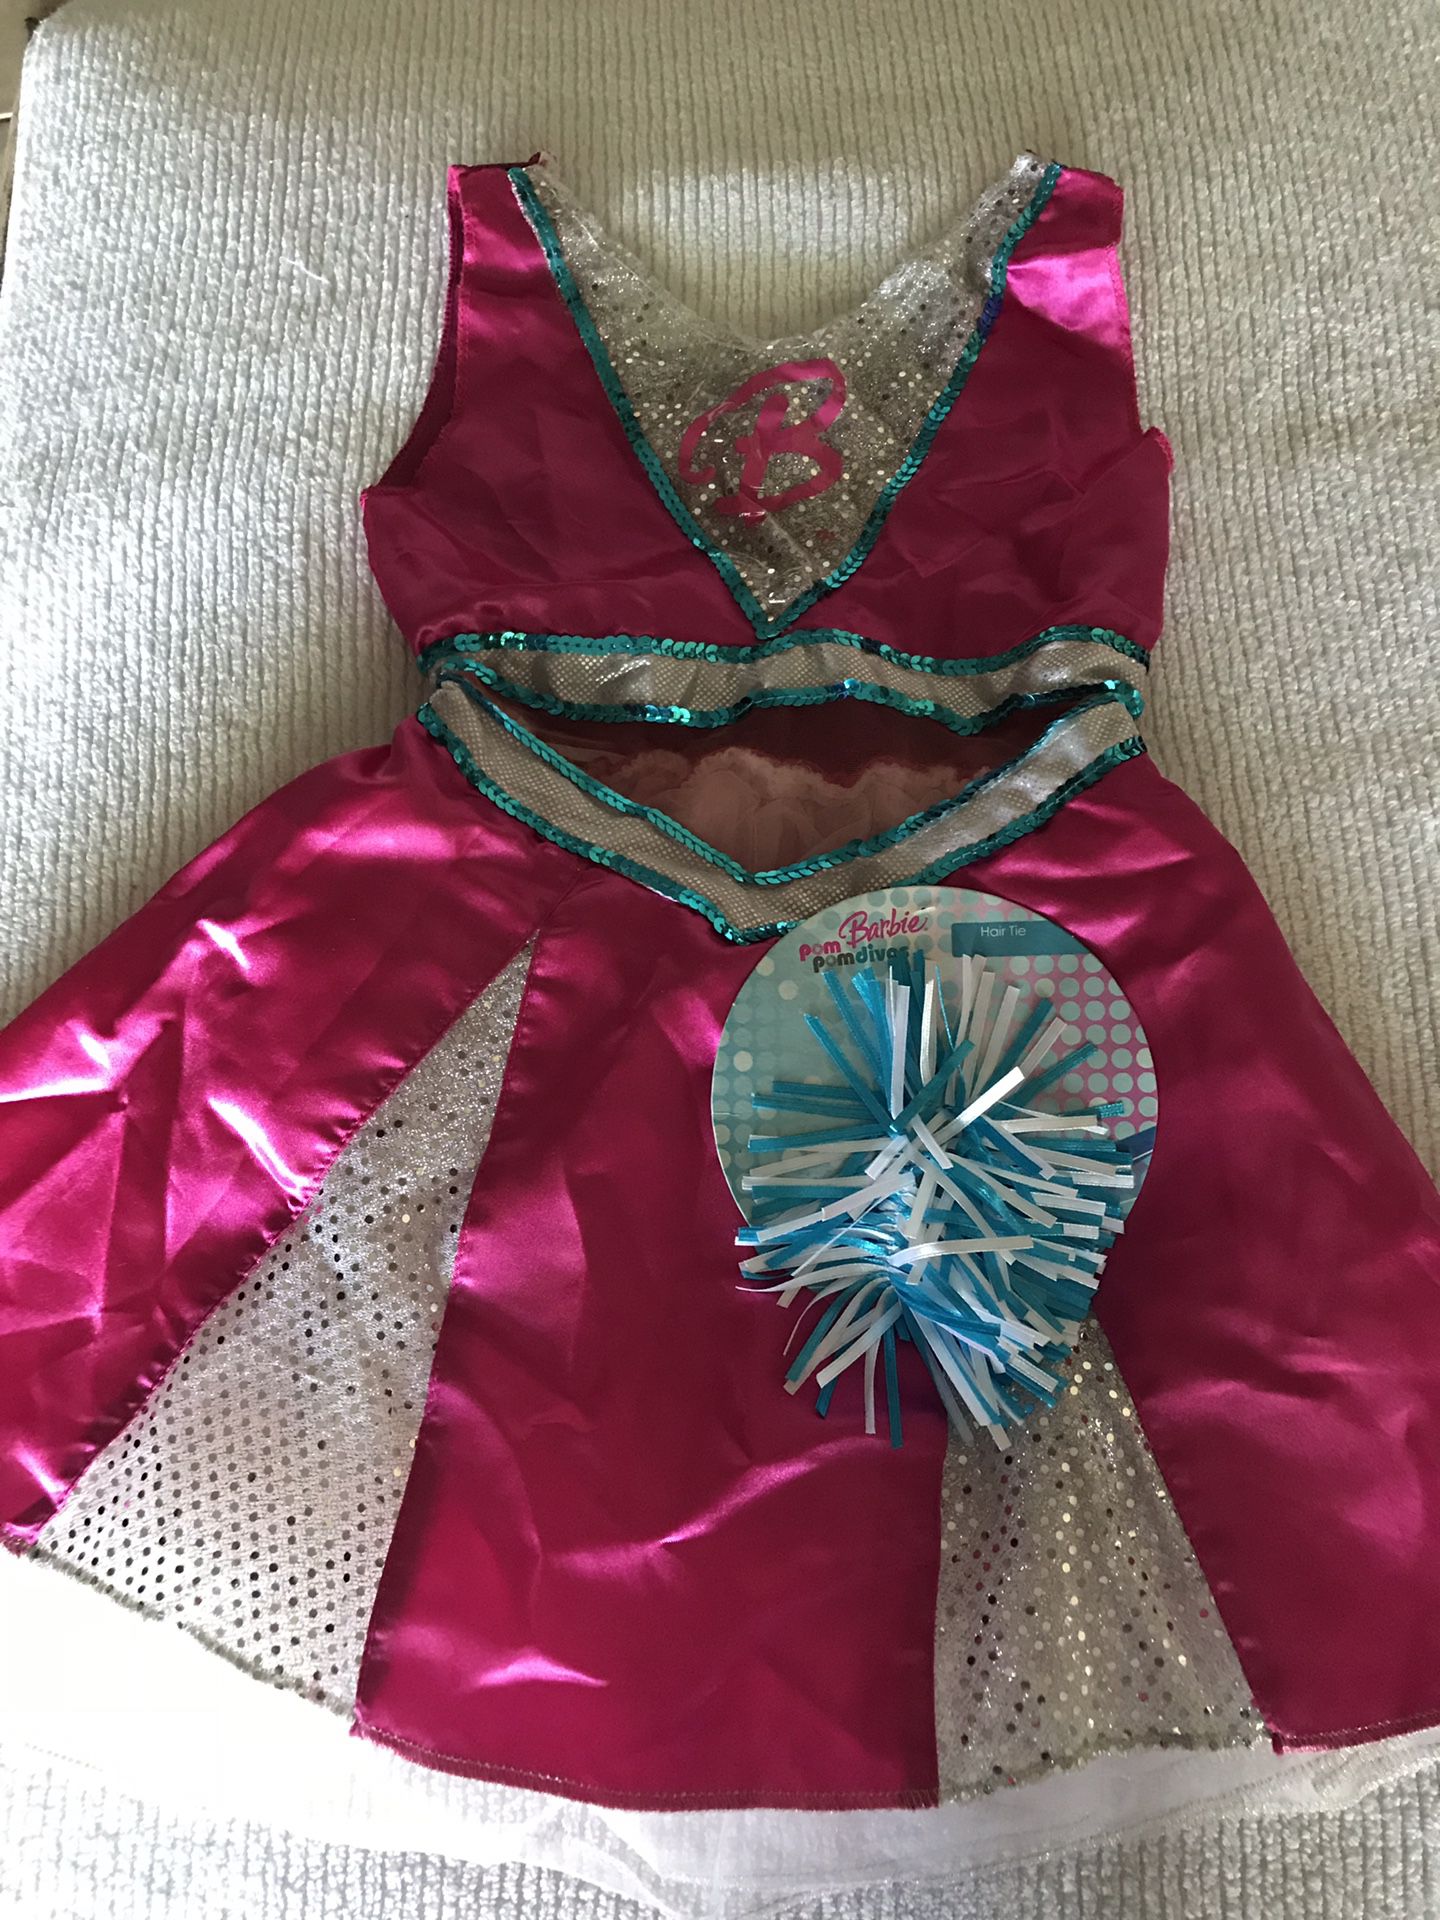 Barbie costume dress size 4/6x new